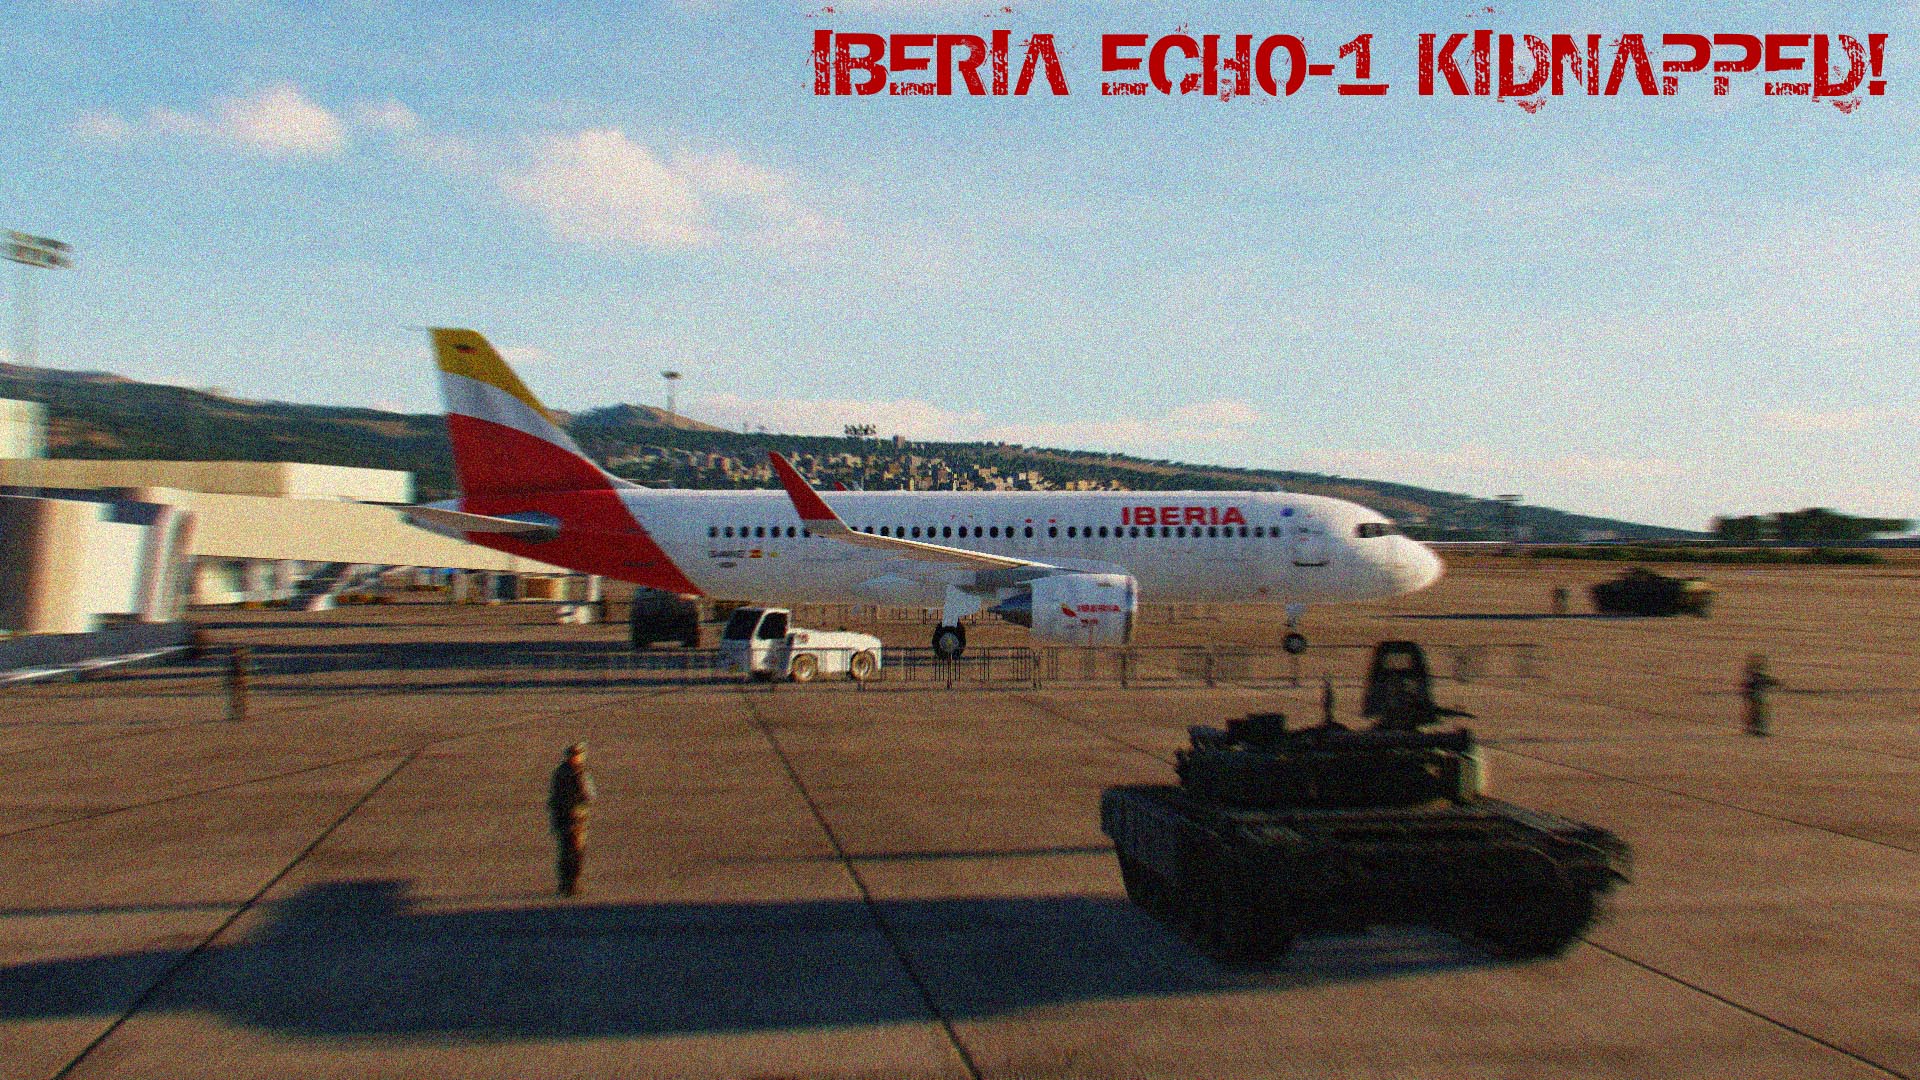 Liberating Iberia Echo-1 (UPDATED)